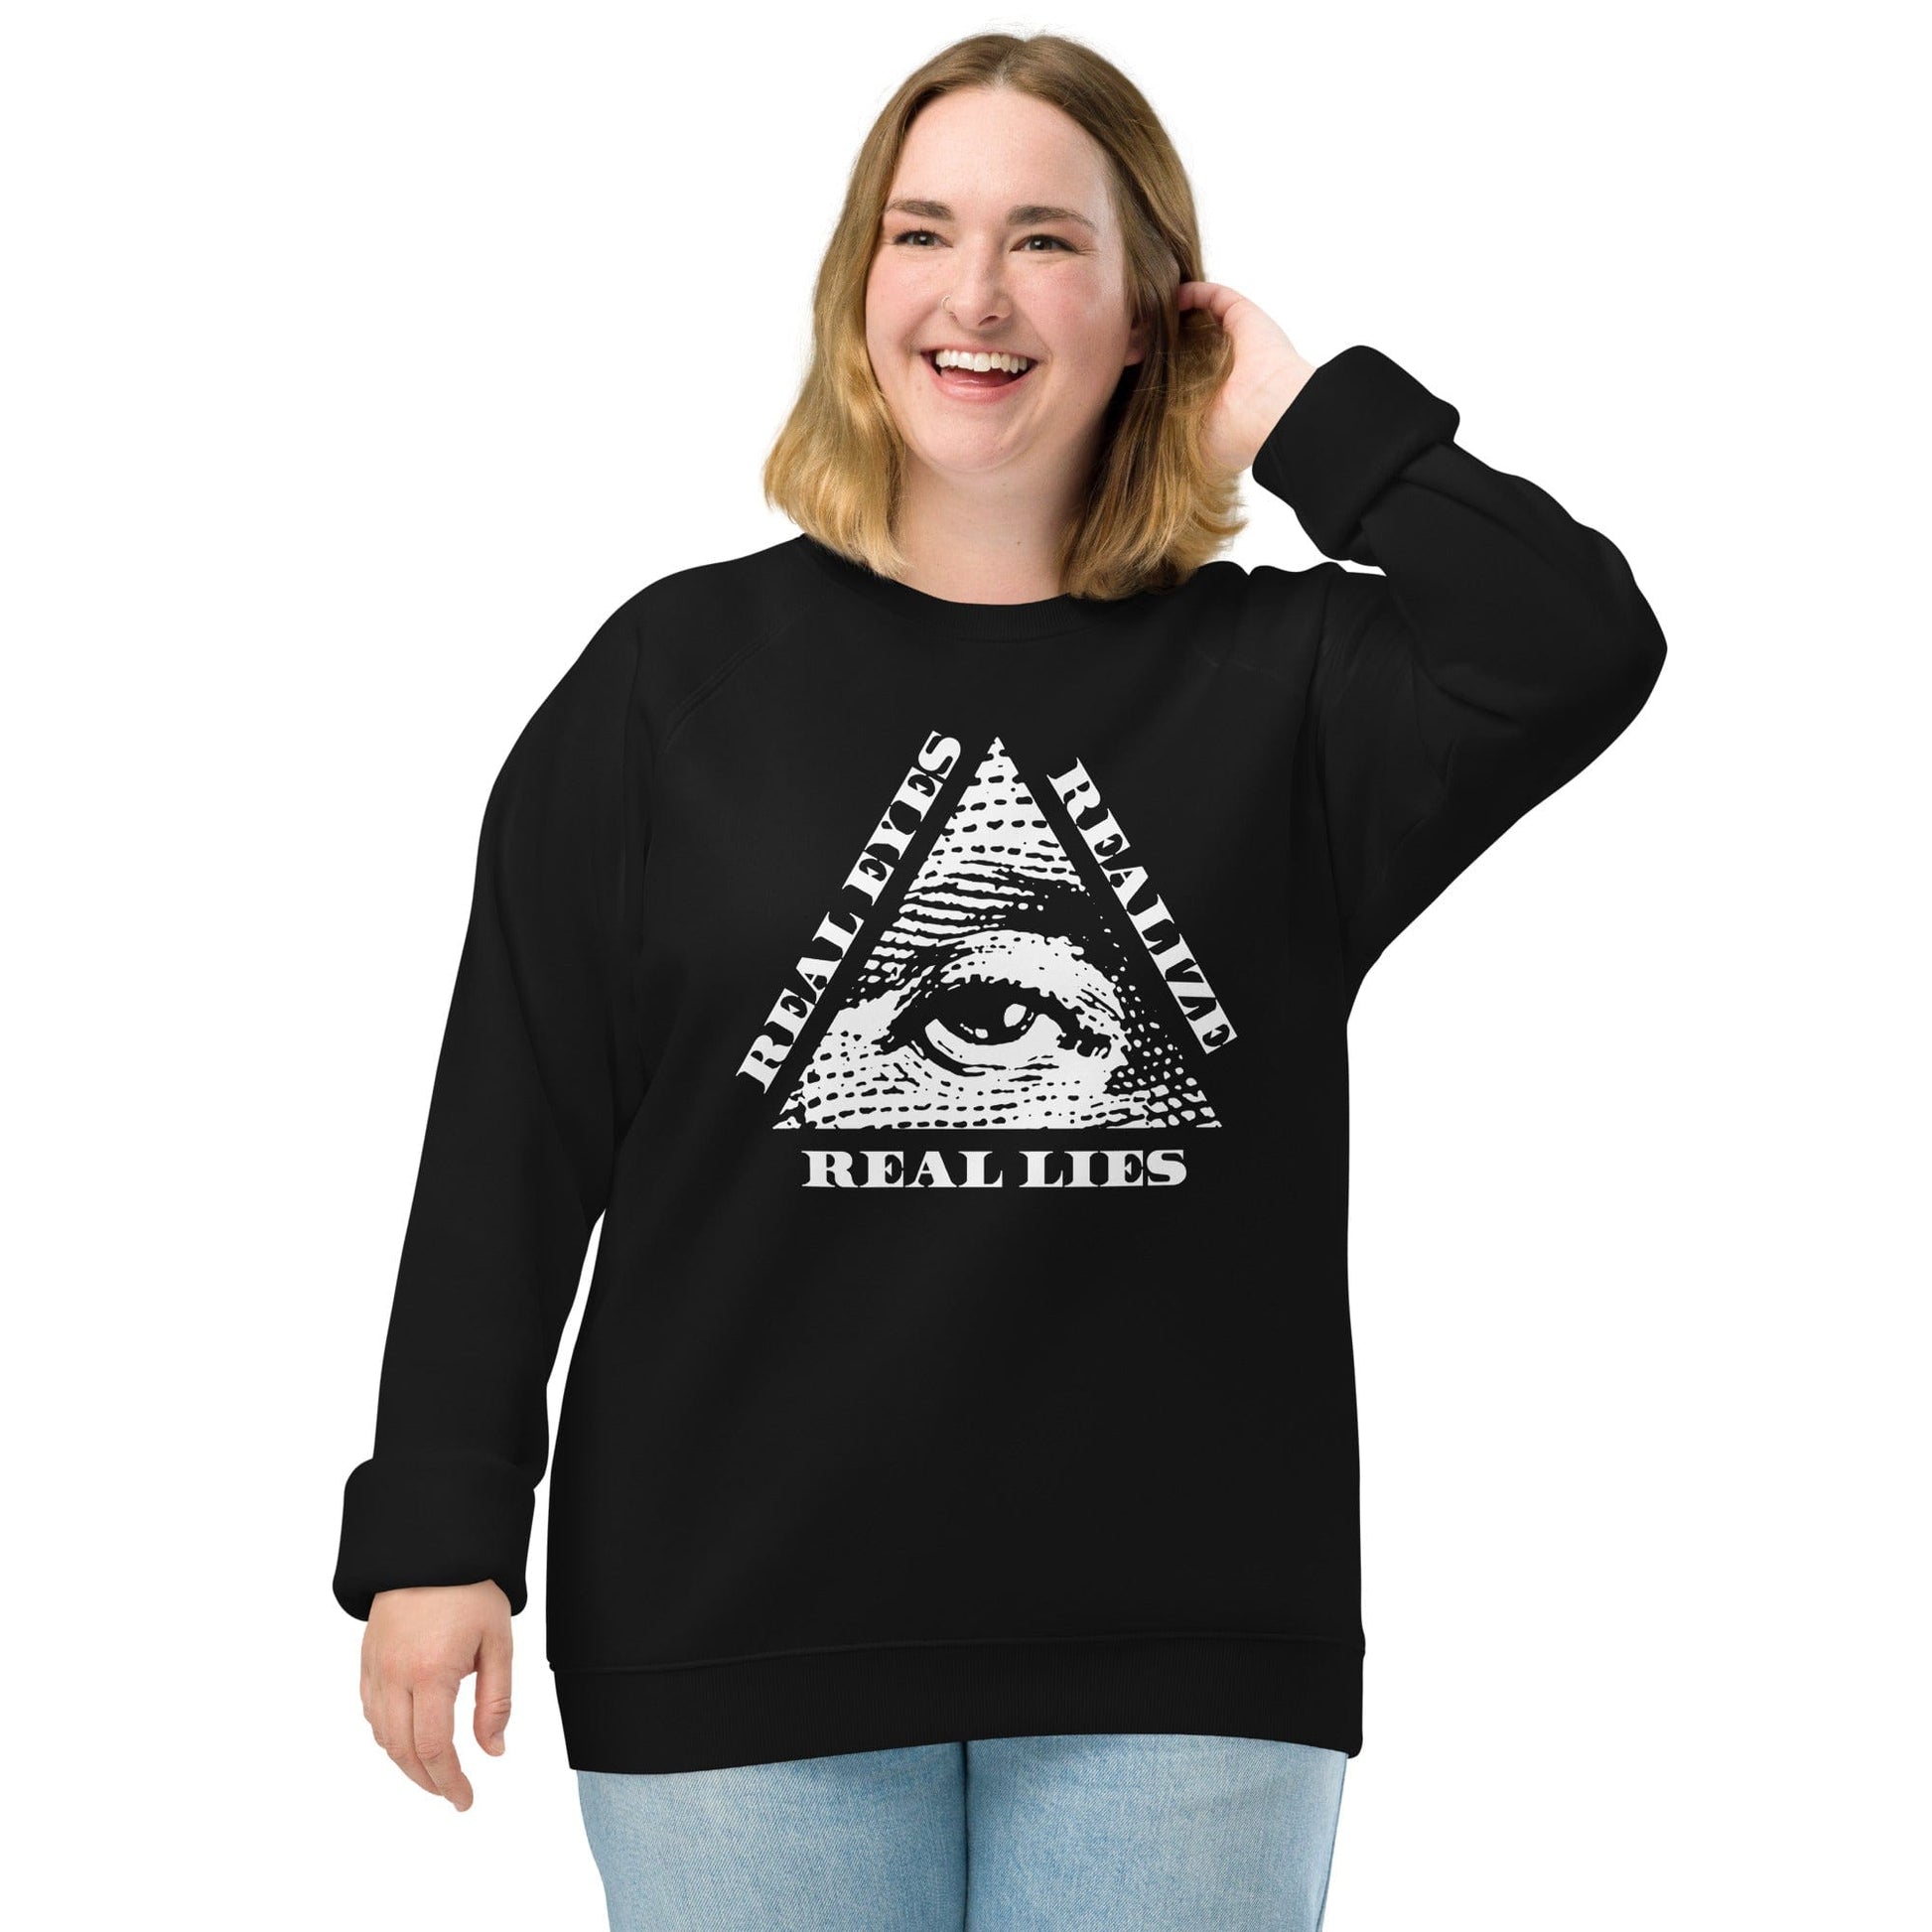 Real Eyes Realize Real Lies - All seeing eye - Eco Sweatshirt